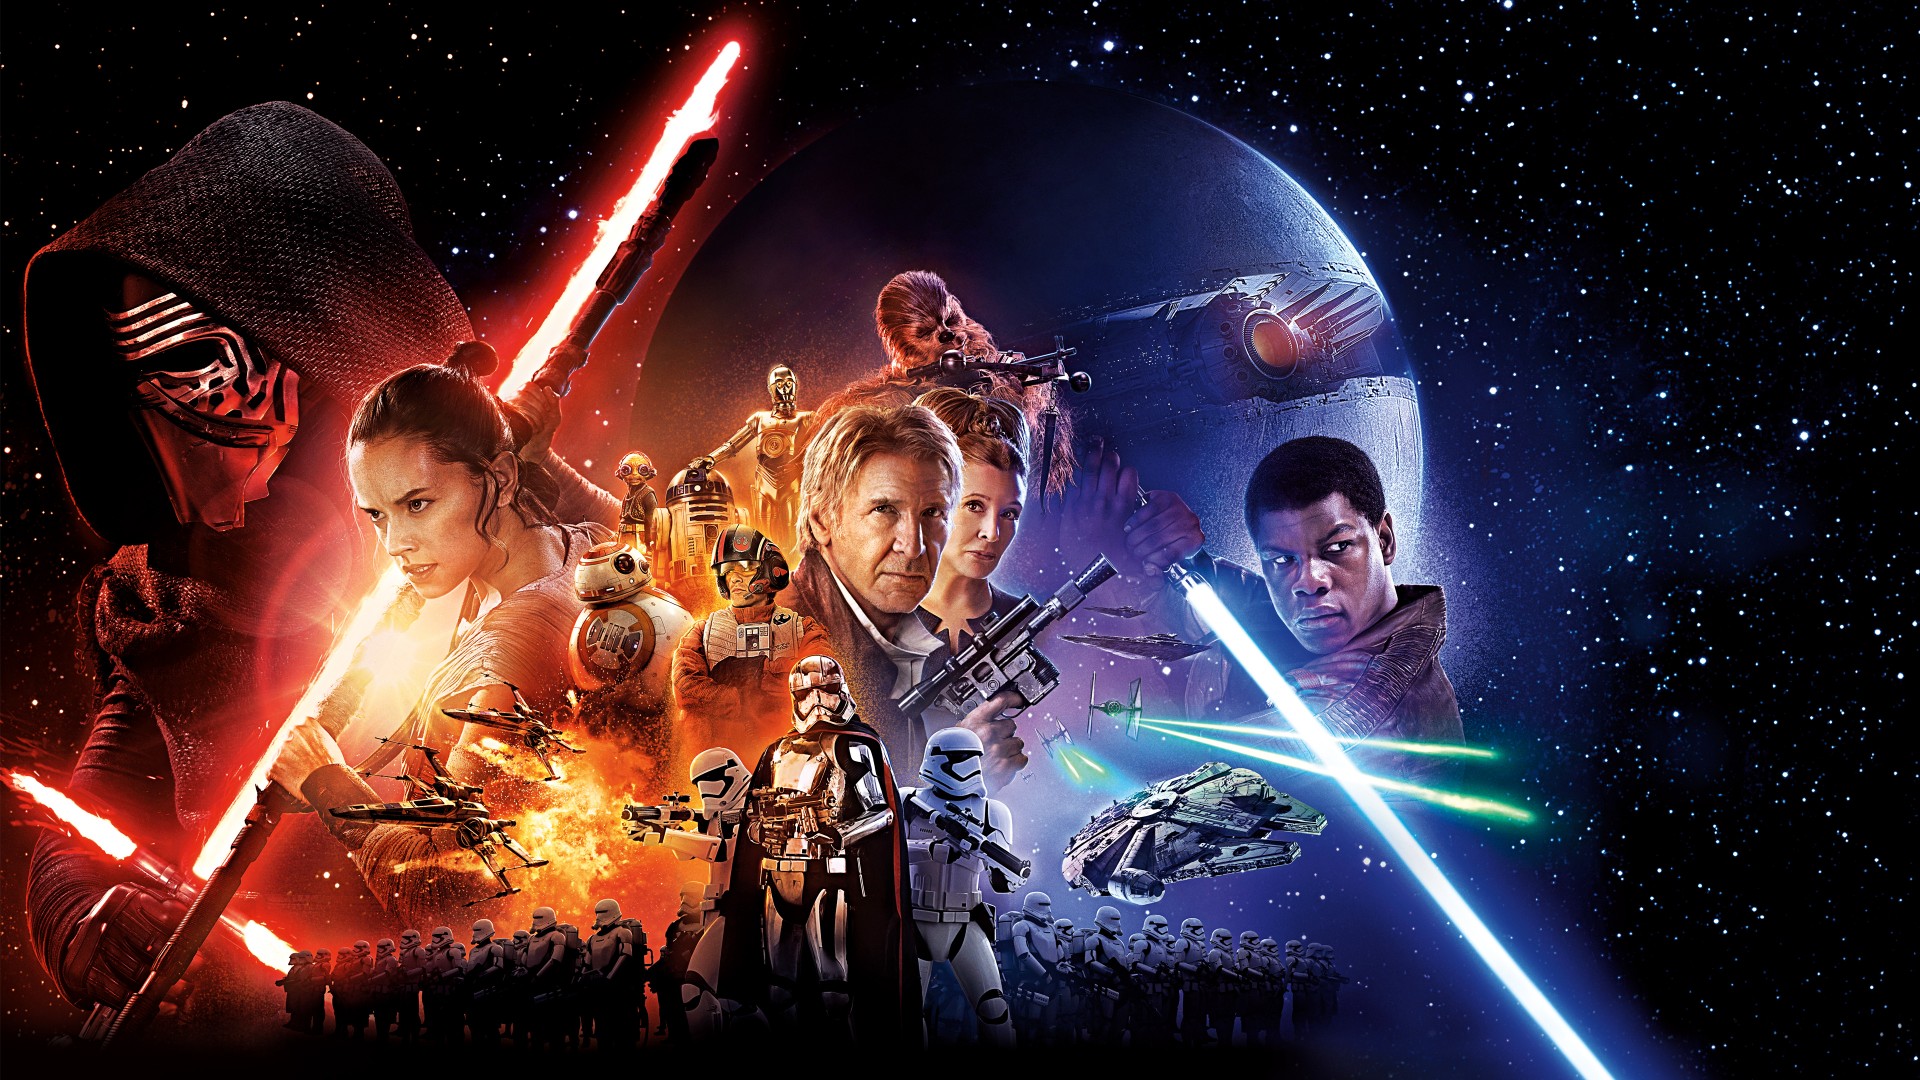 the force awakens wallpaper,space,fictional character,movie,luke skywalker,games